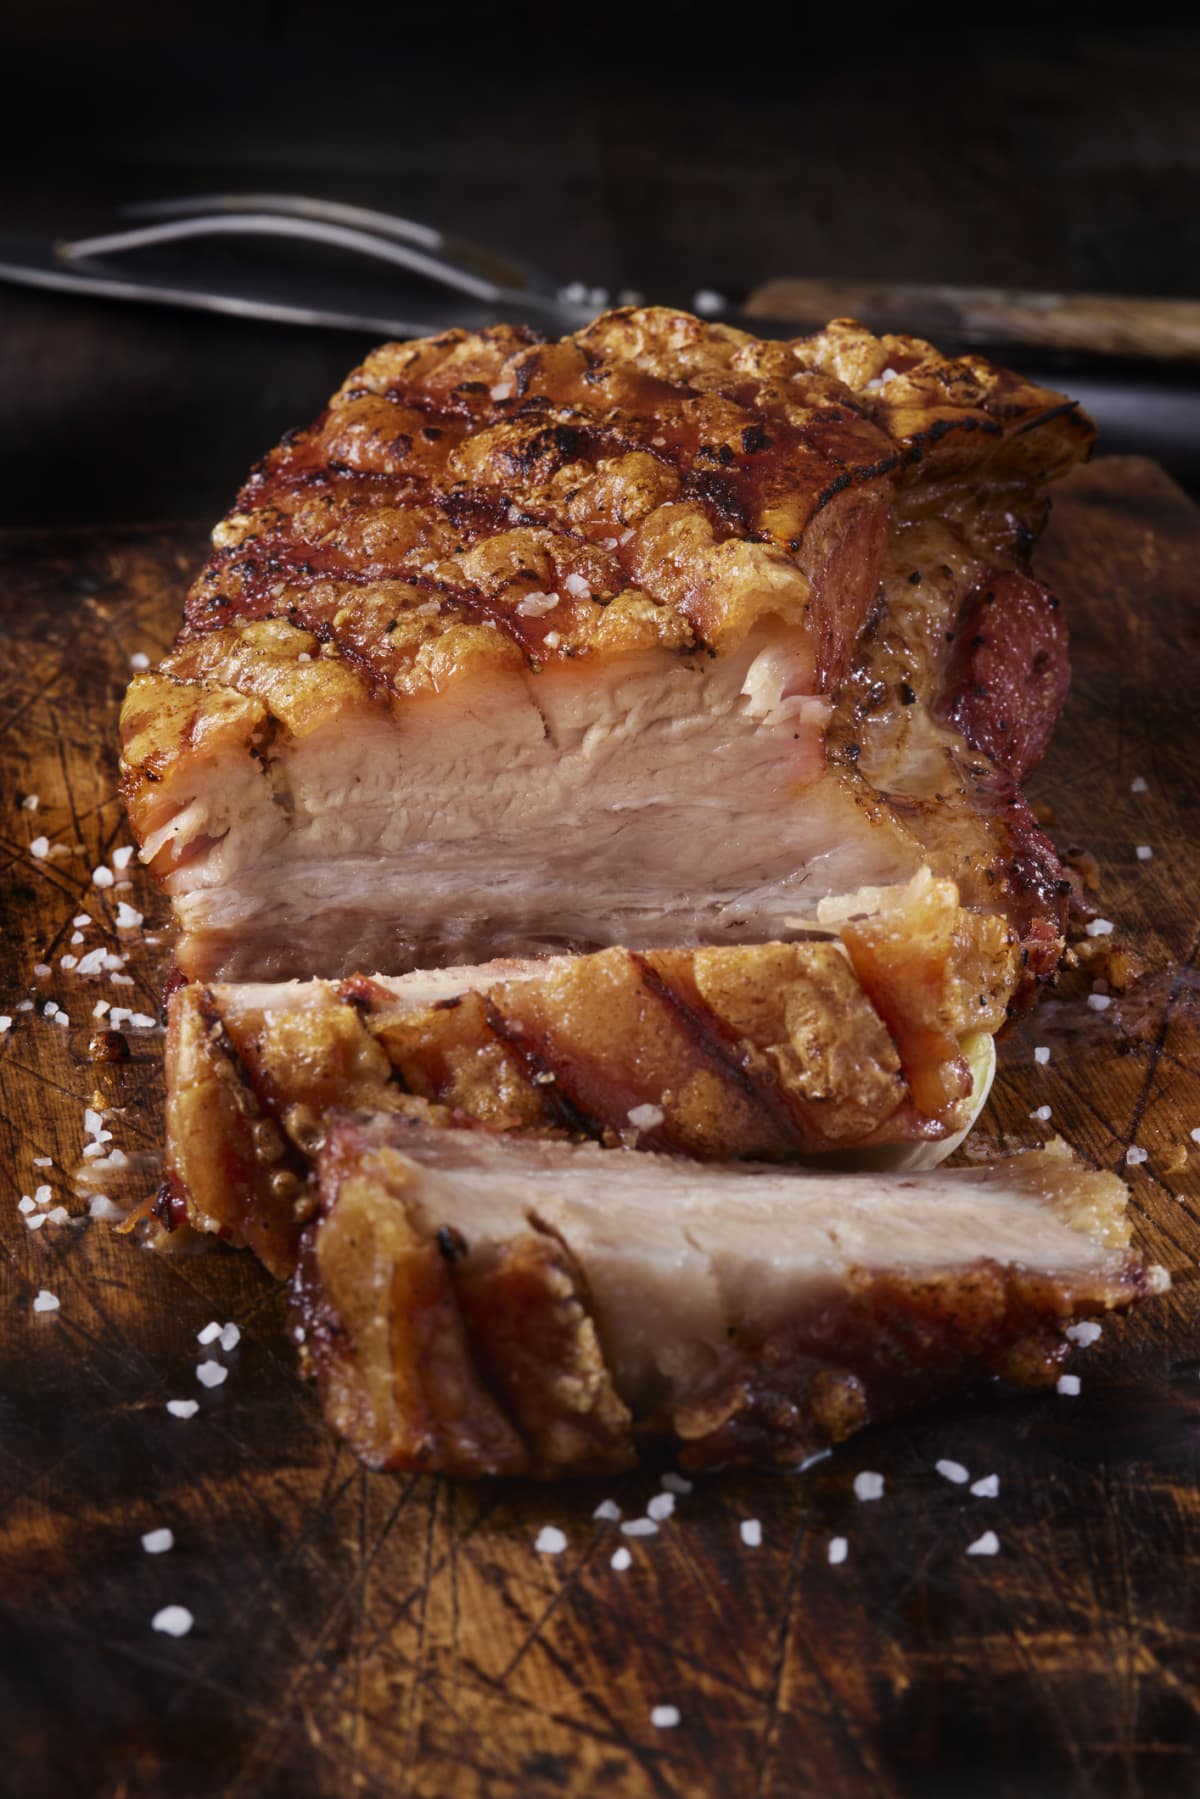 Crispy skin-on pork roast on a wooden cutting board